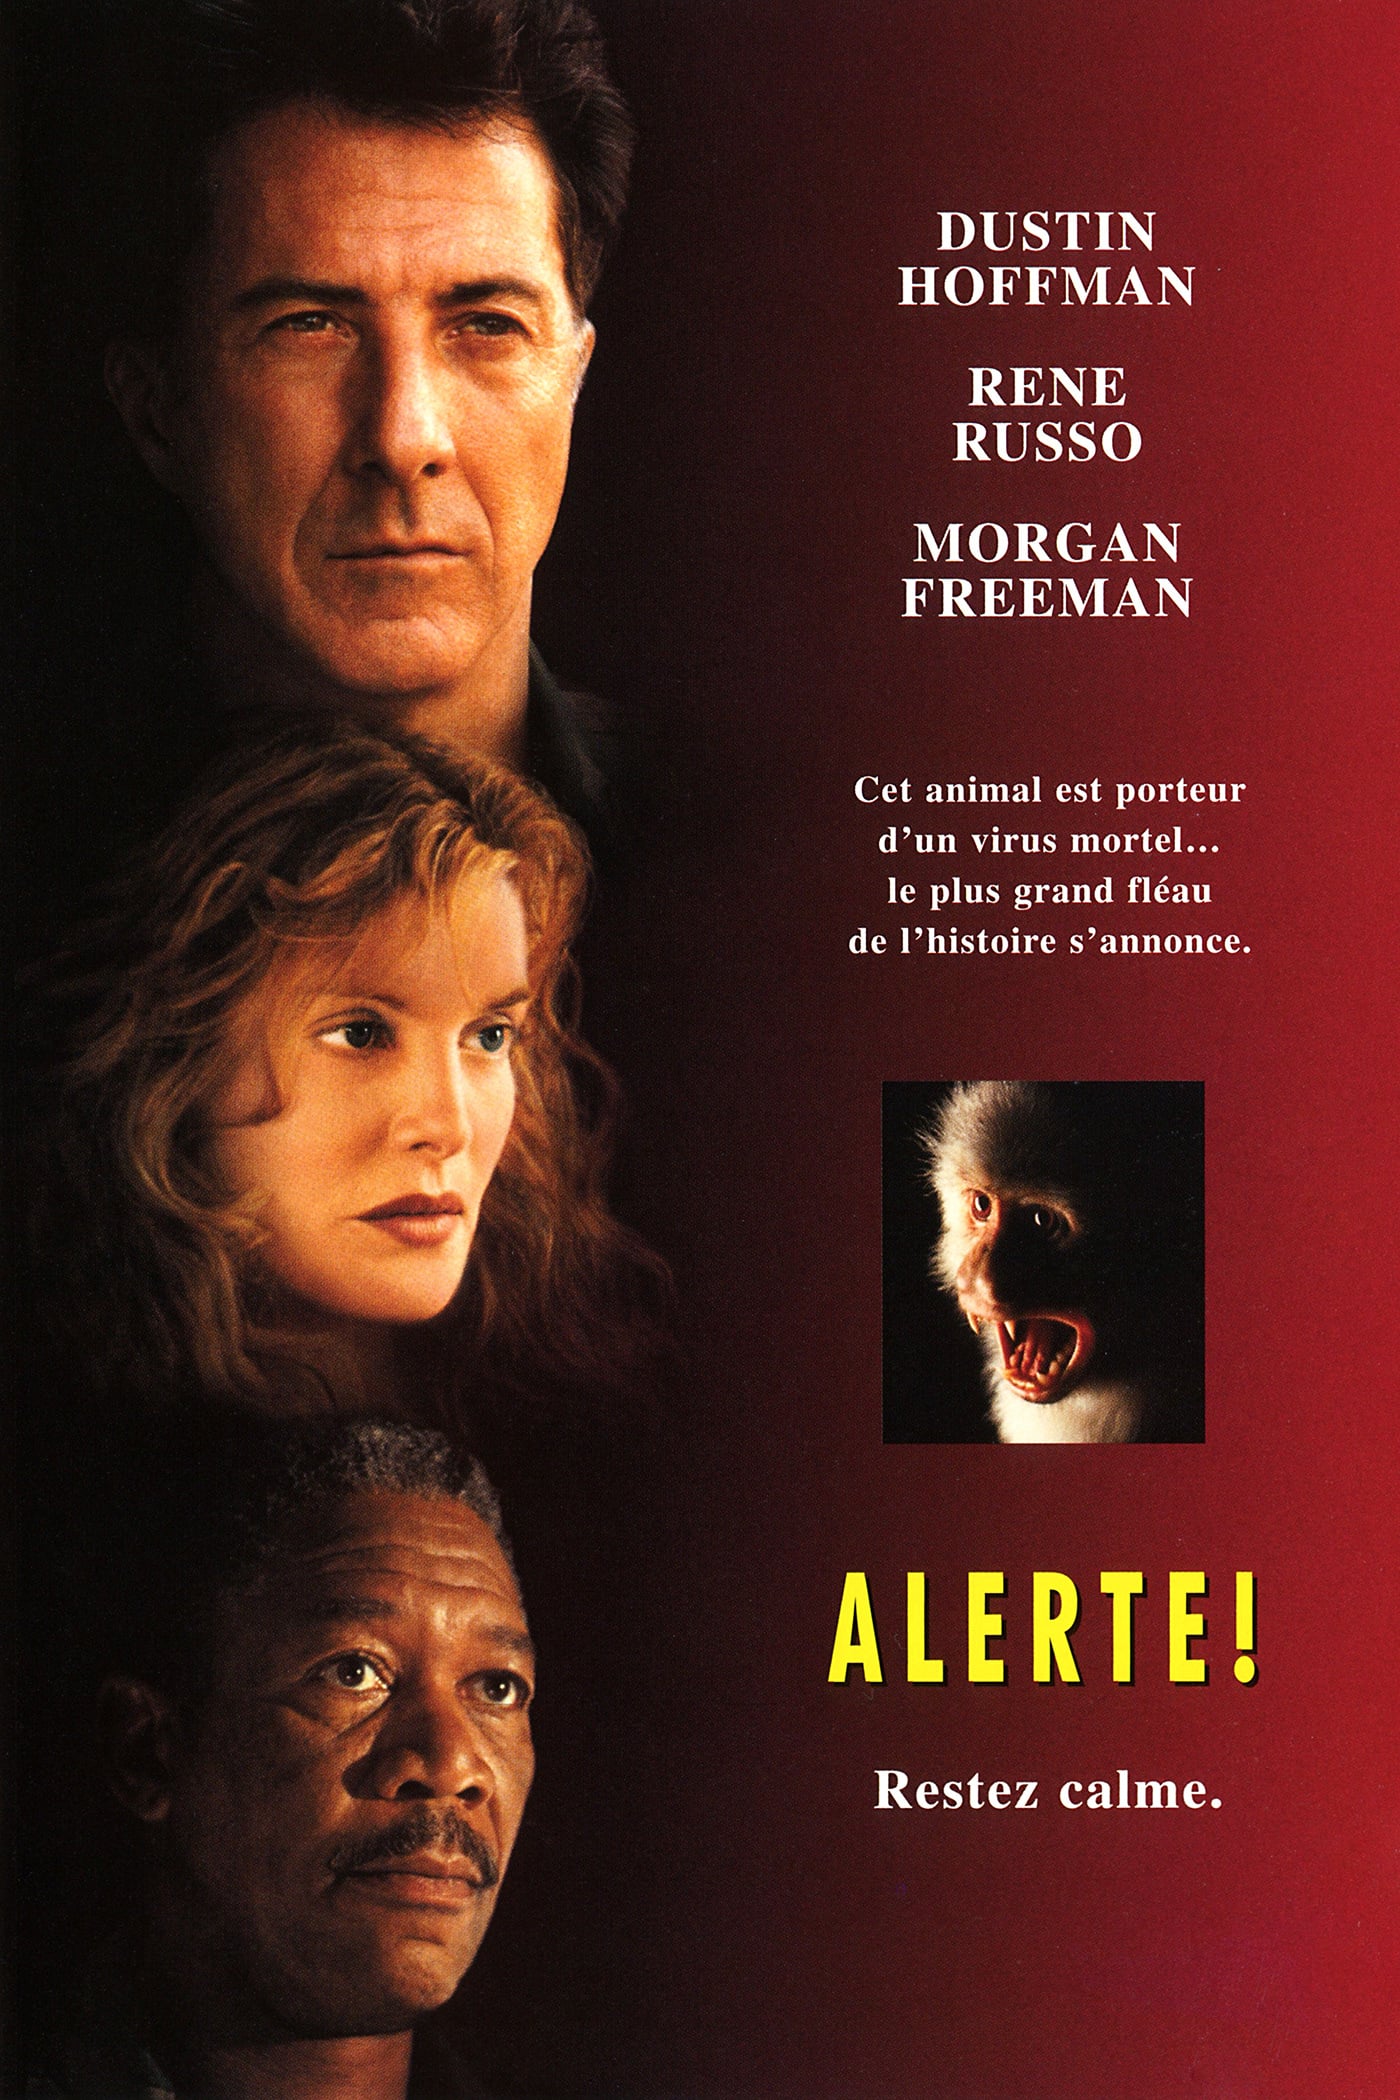 Affiche du film "Alerte !"